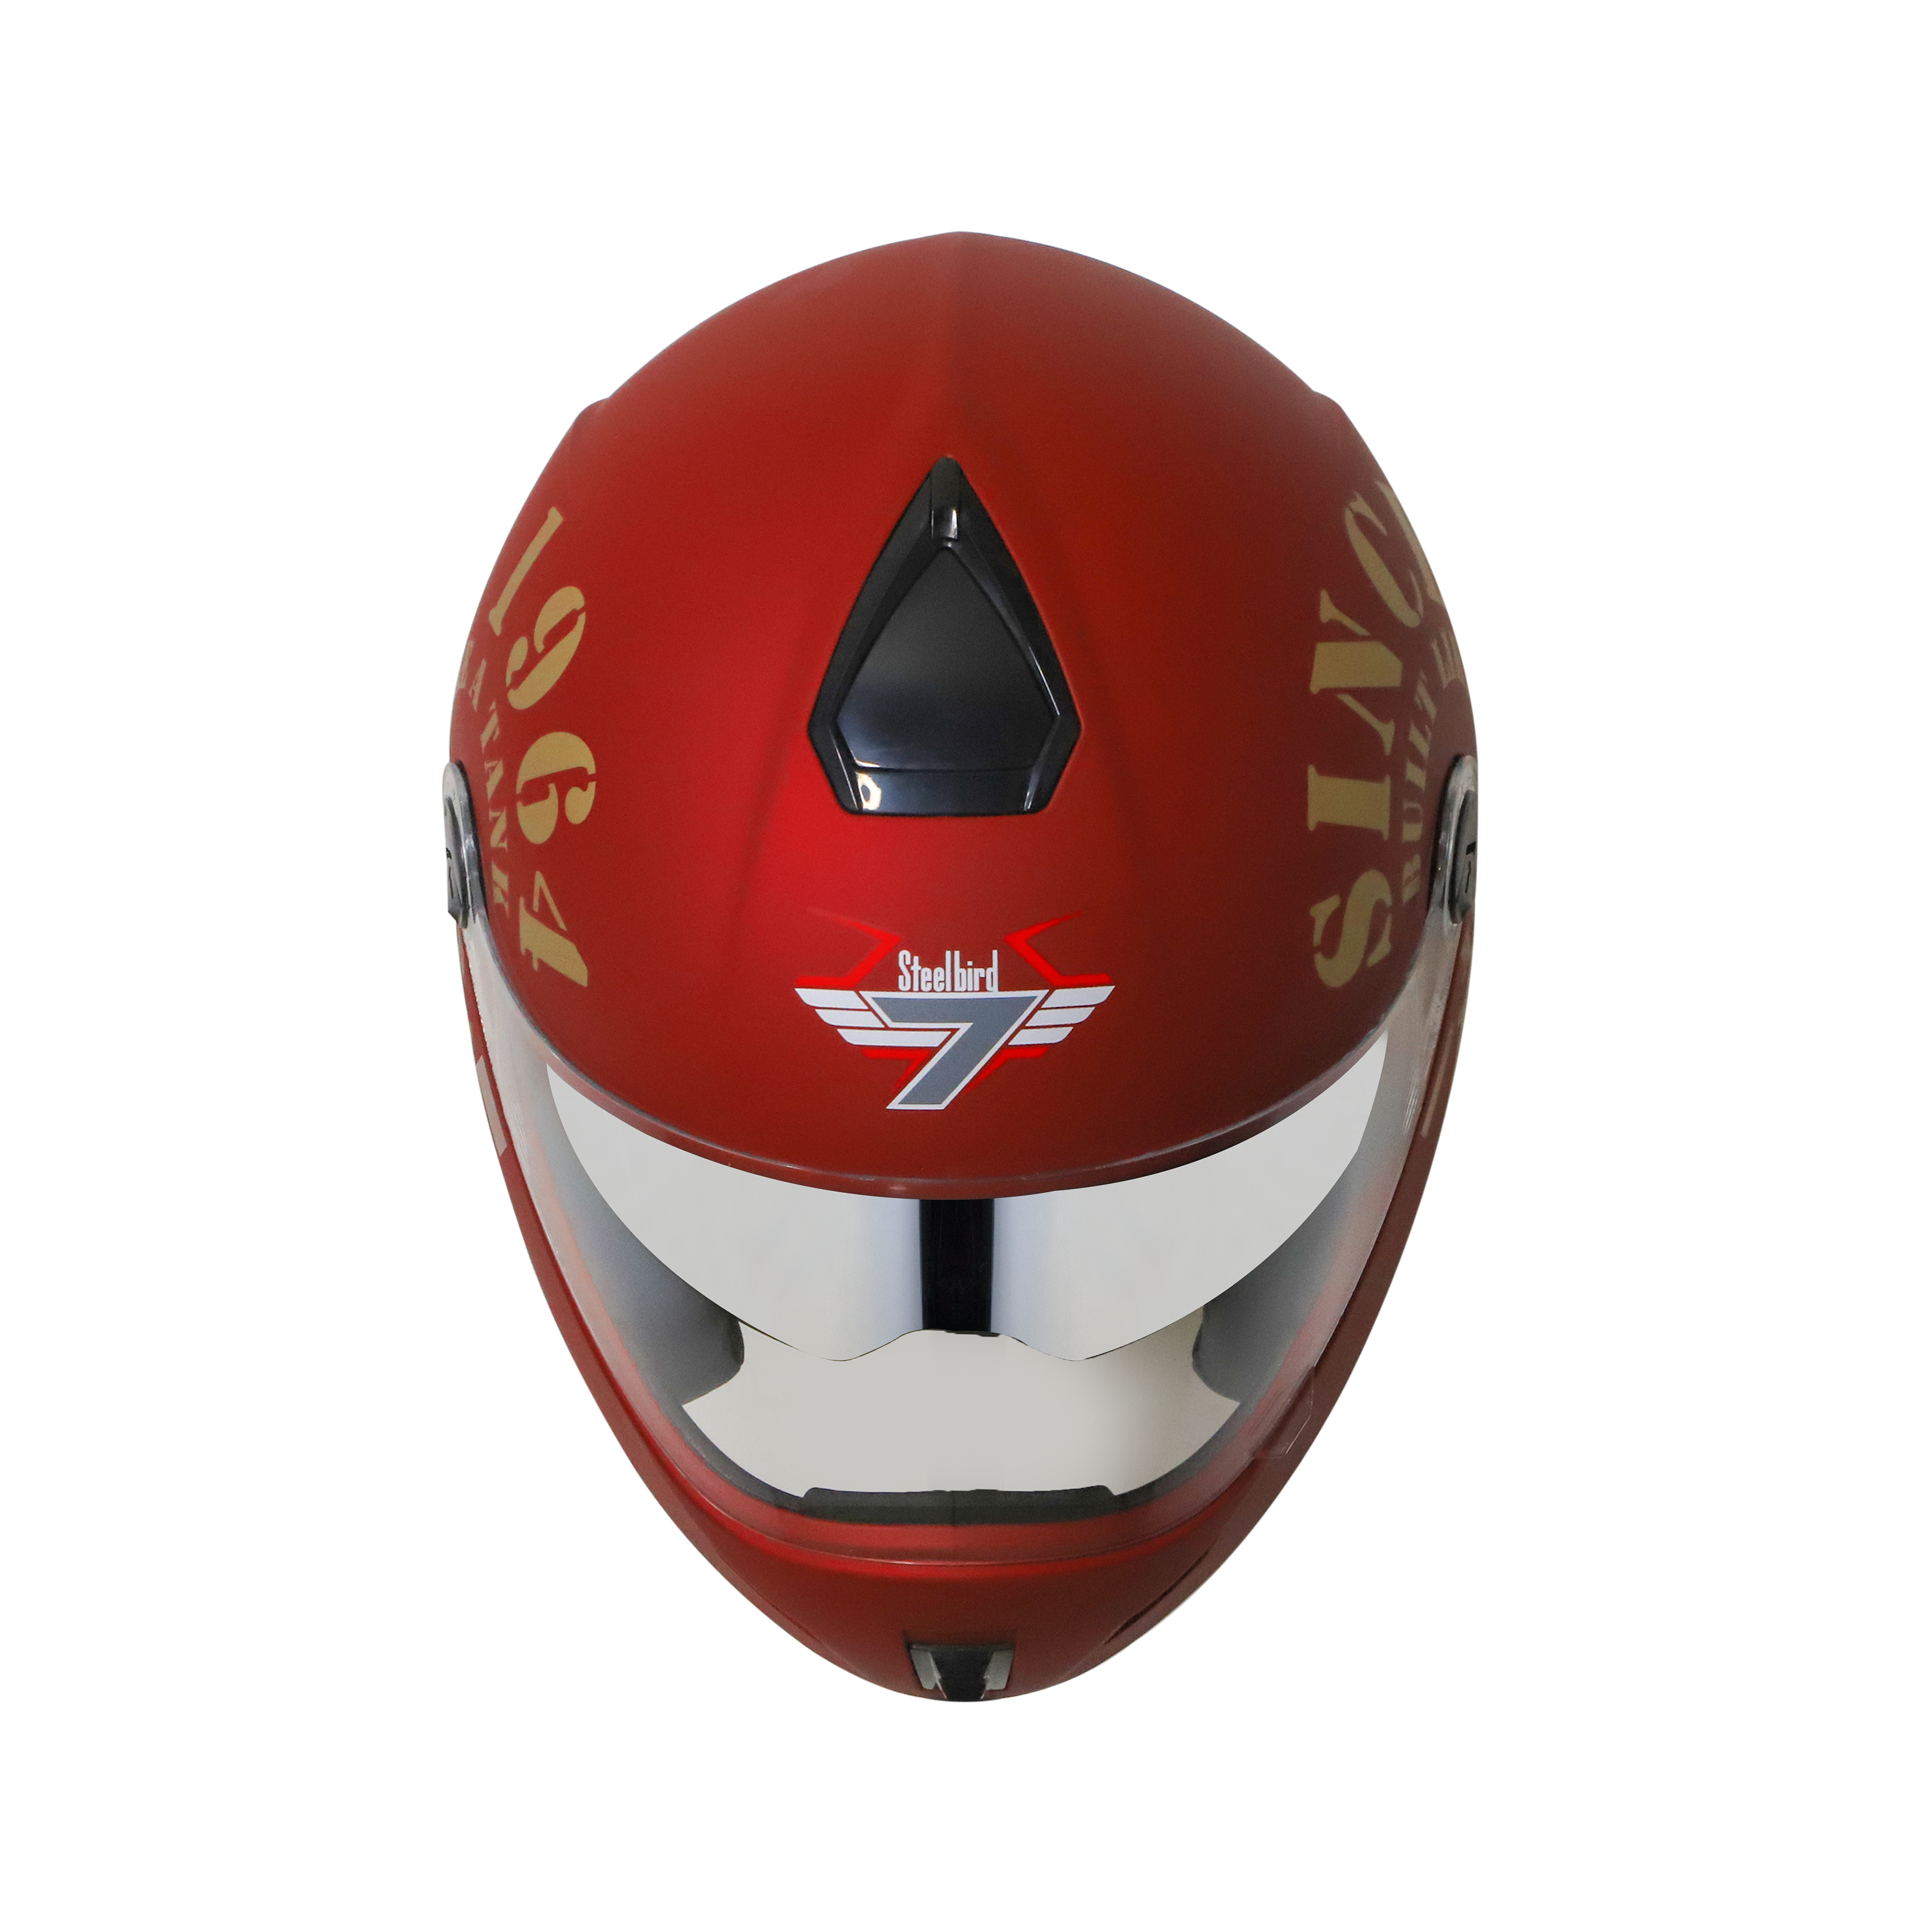 Steelbird Cyborg Tank Full Face Helmet With Chrome Silver Sun Shield, ISI Certified Helmet (Matt Maroon Gold)